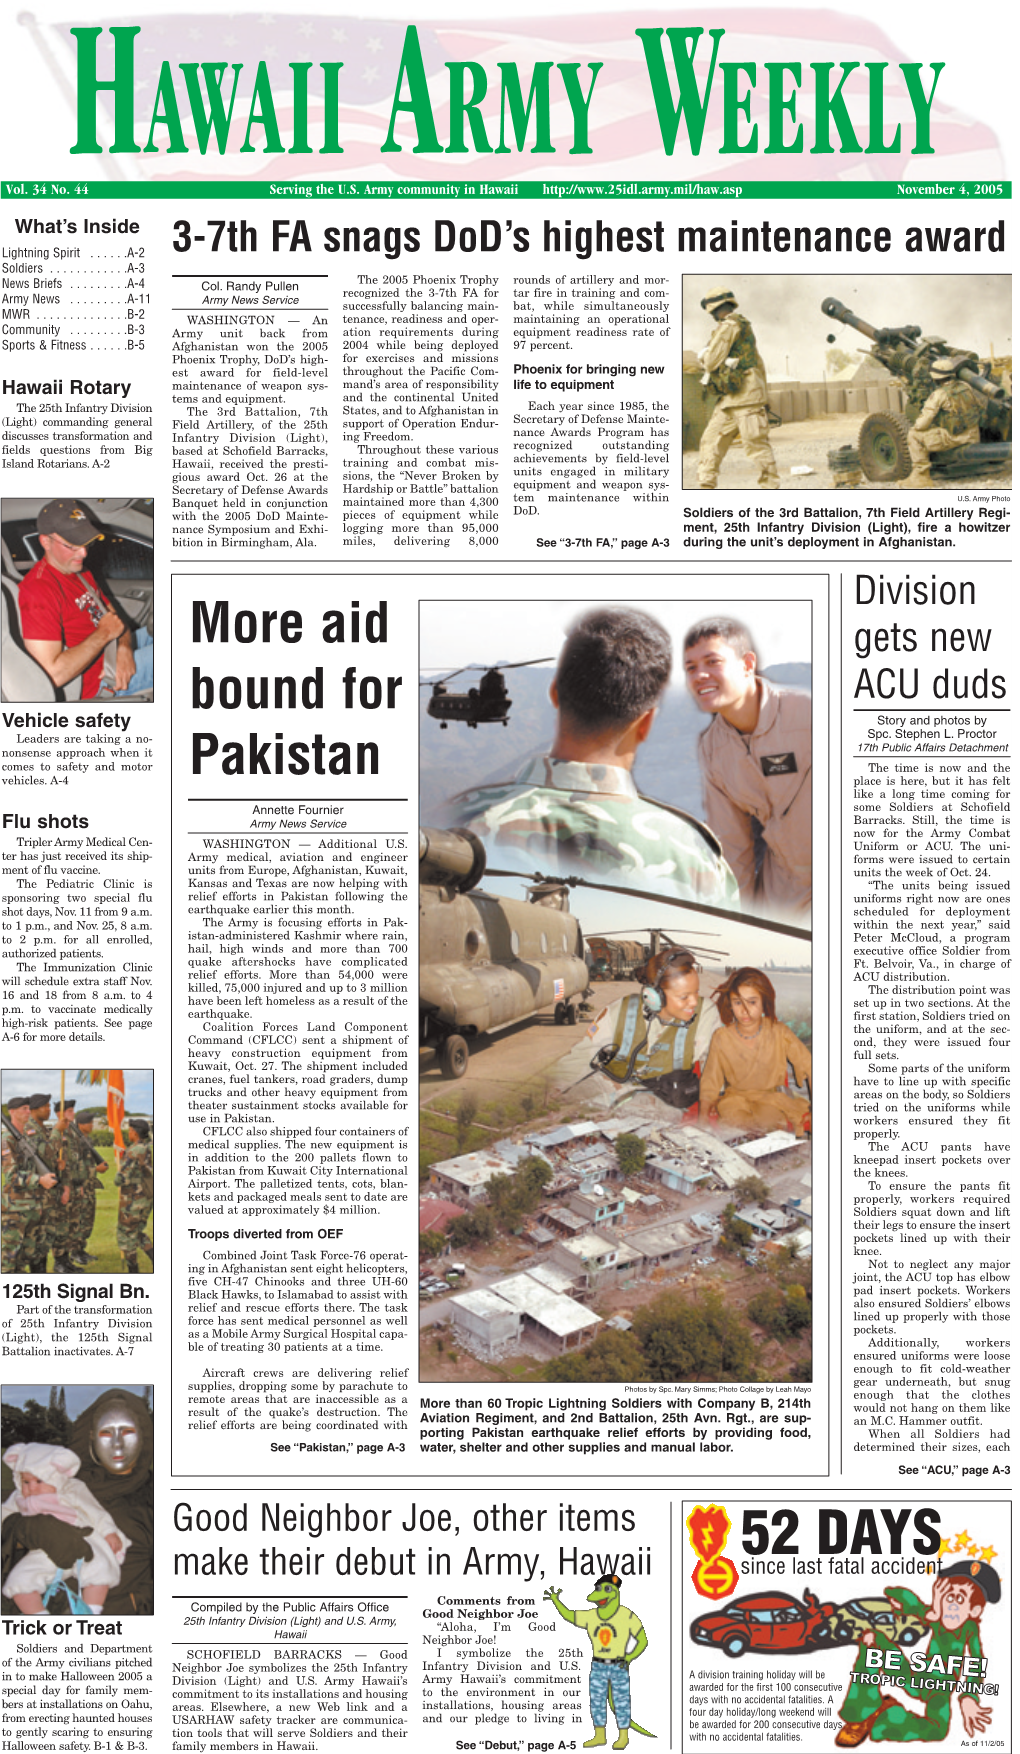 Hawaii Army Weekly NEWS & COMMENTARY November 4, 2005